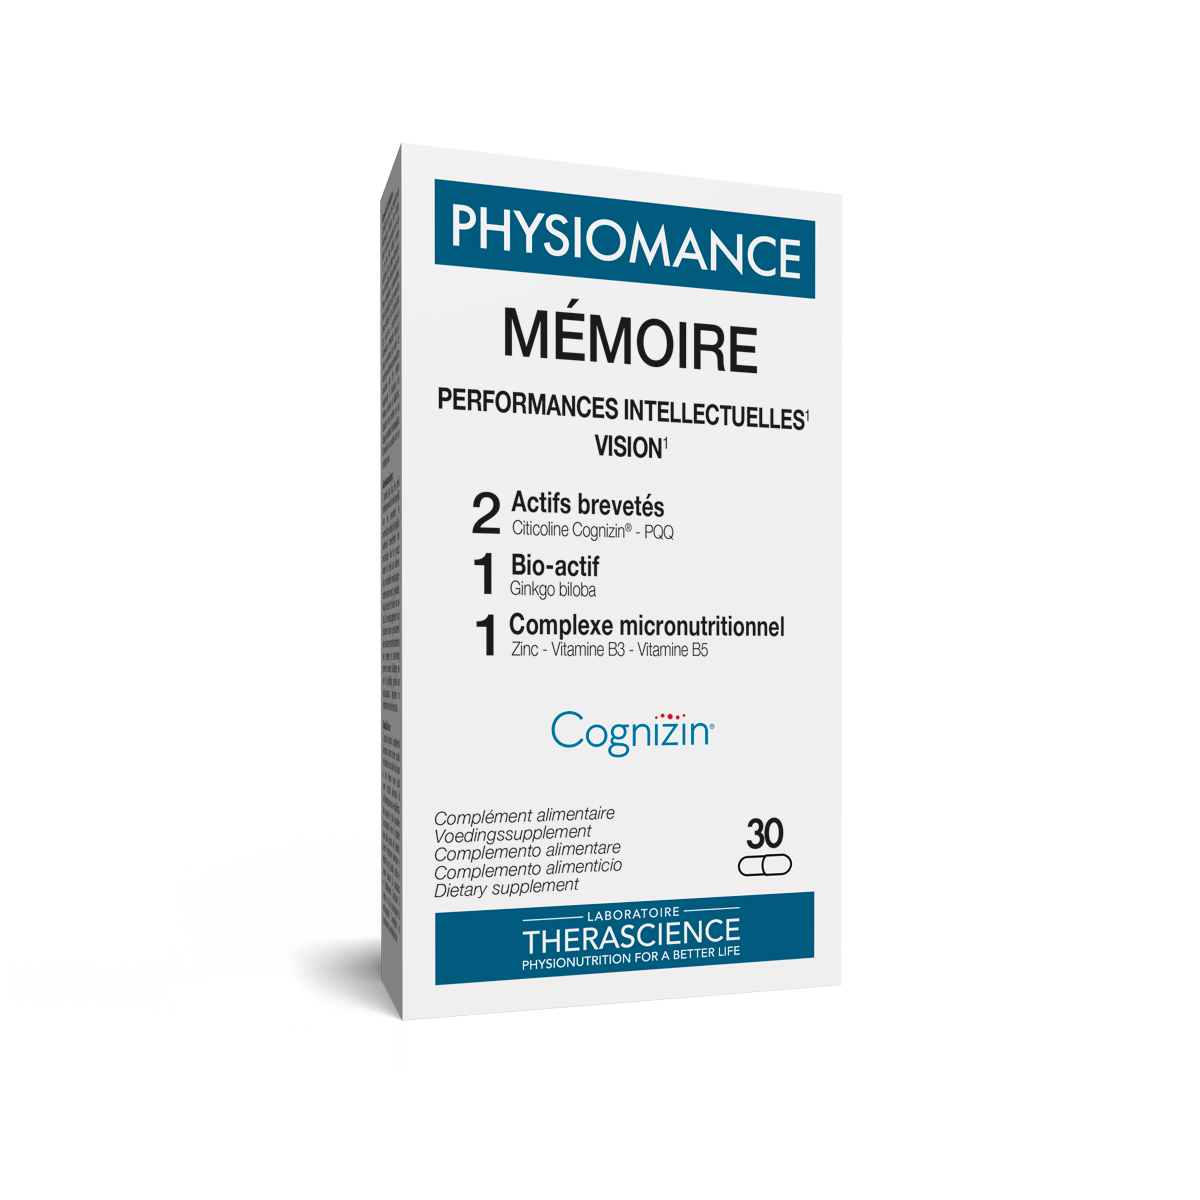 Physiomance memoire